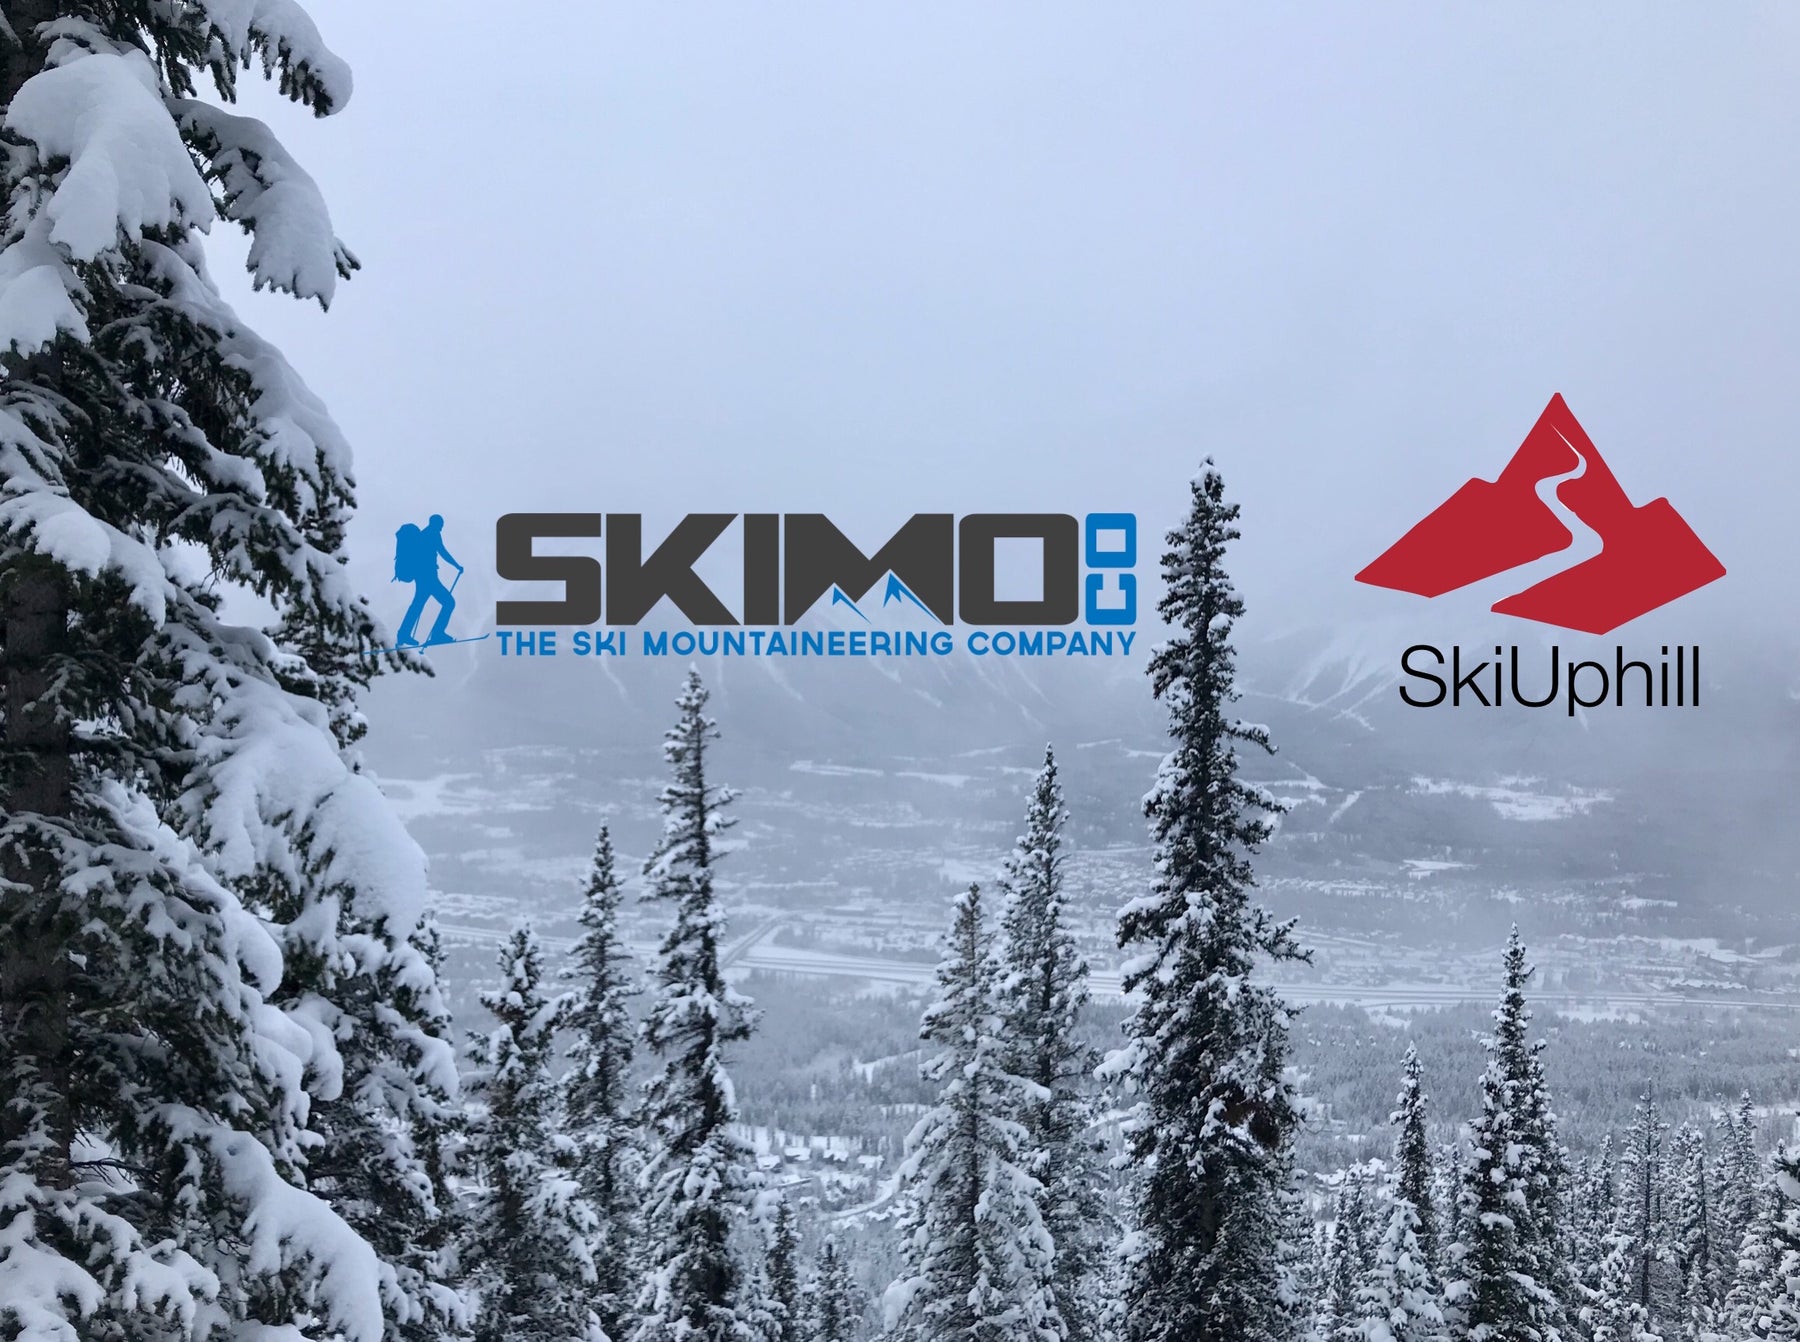 Skimo Co & SkiUphill Partnership